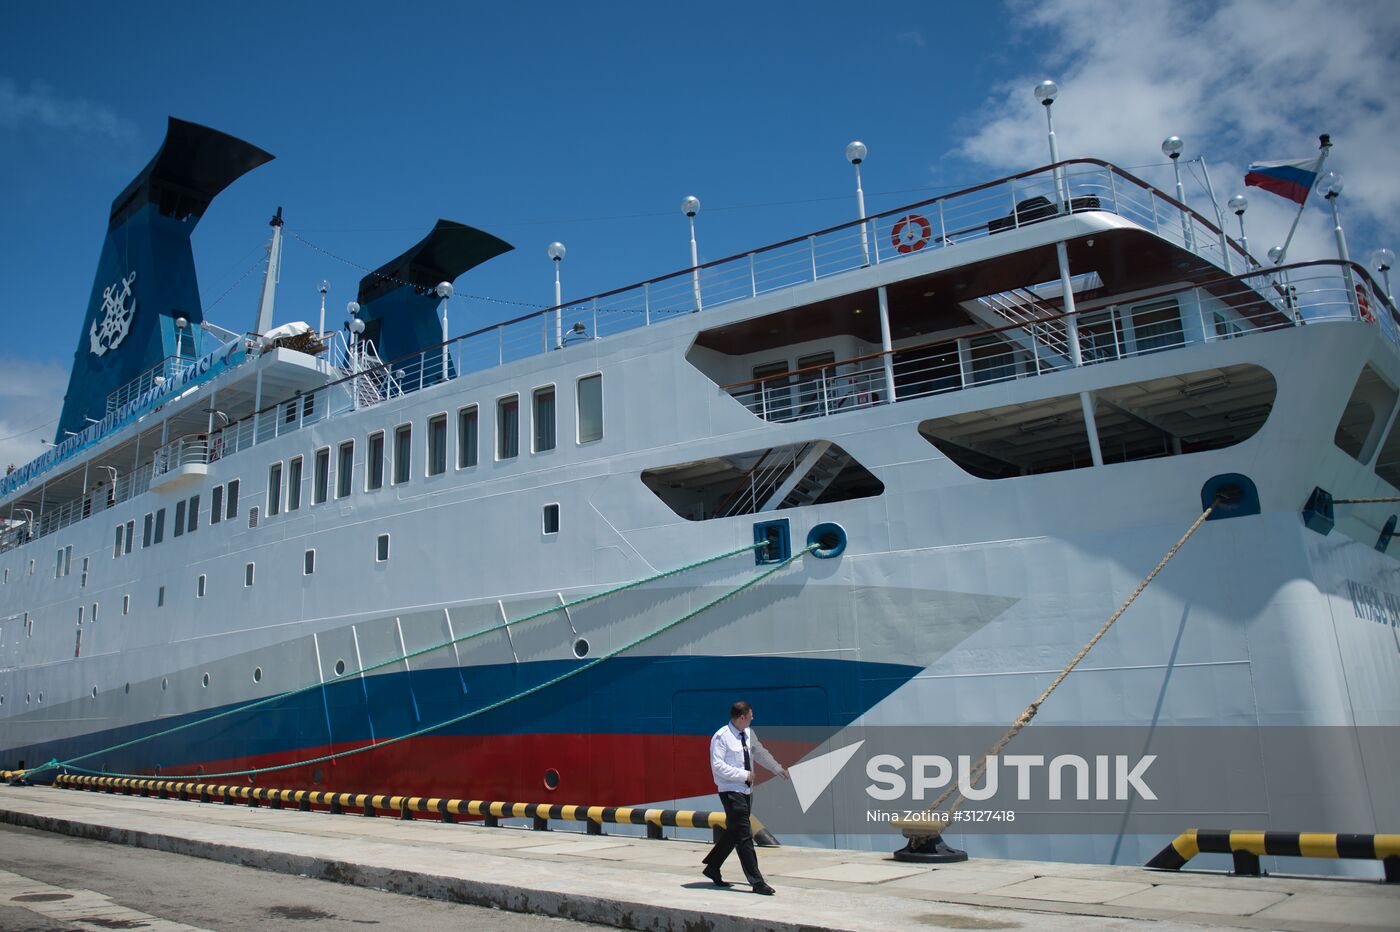 First passenger voyage of Knyaz Vladimir cruise ship from Sochi